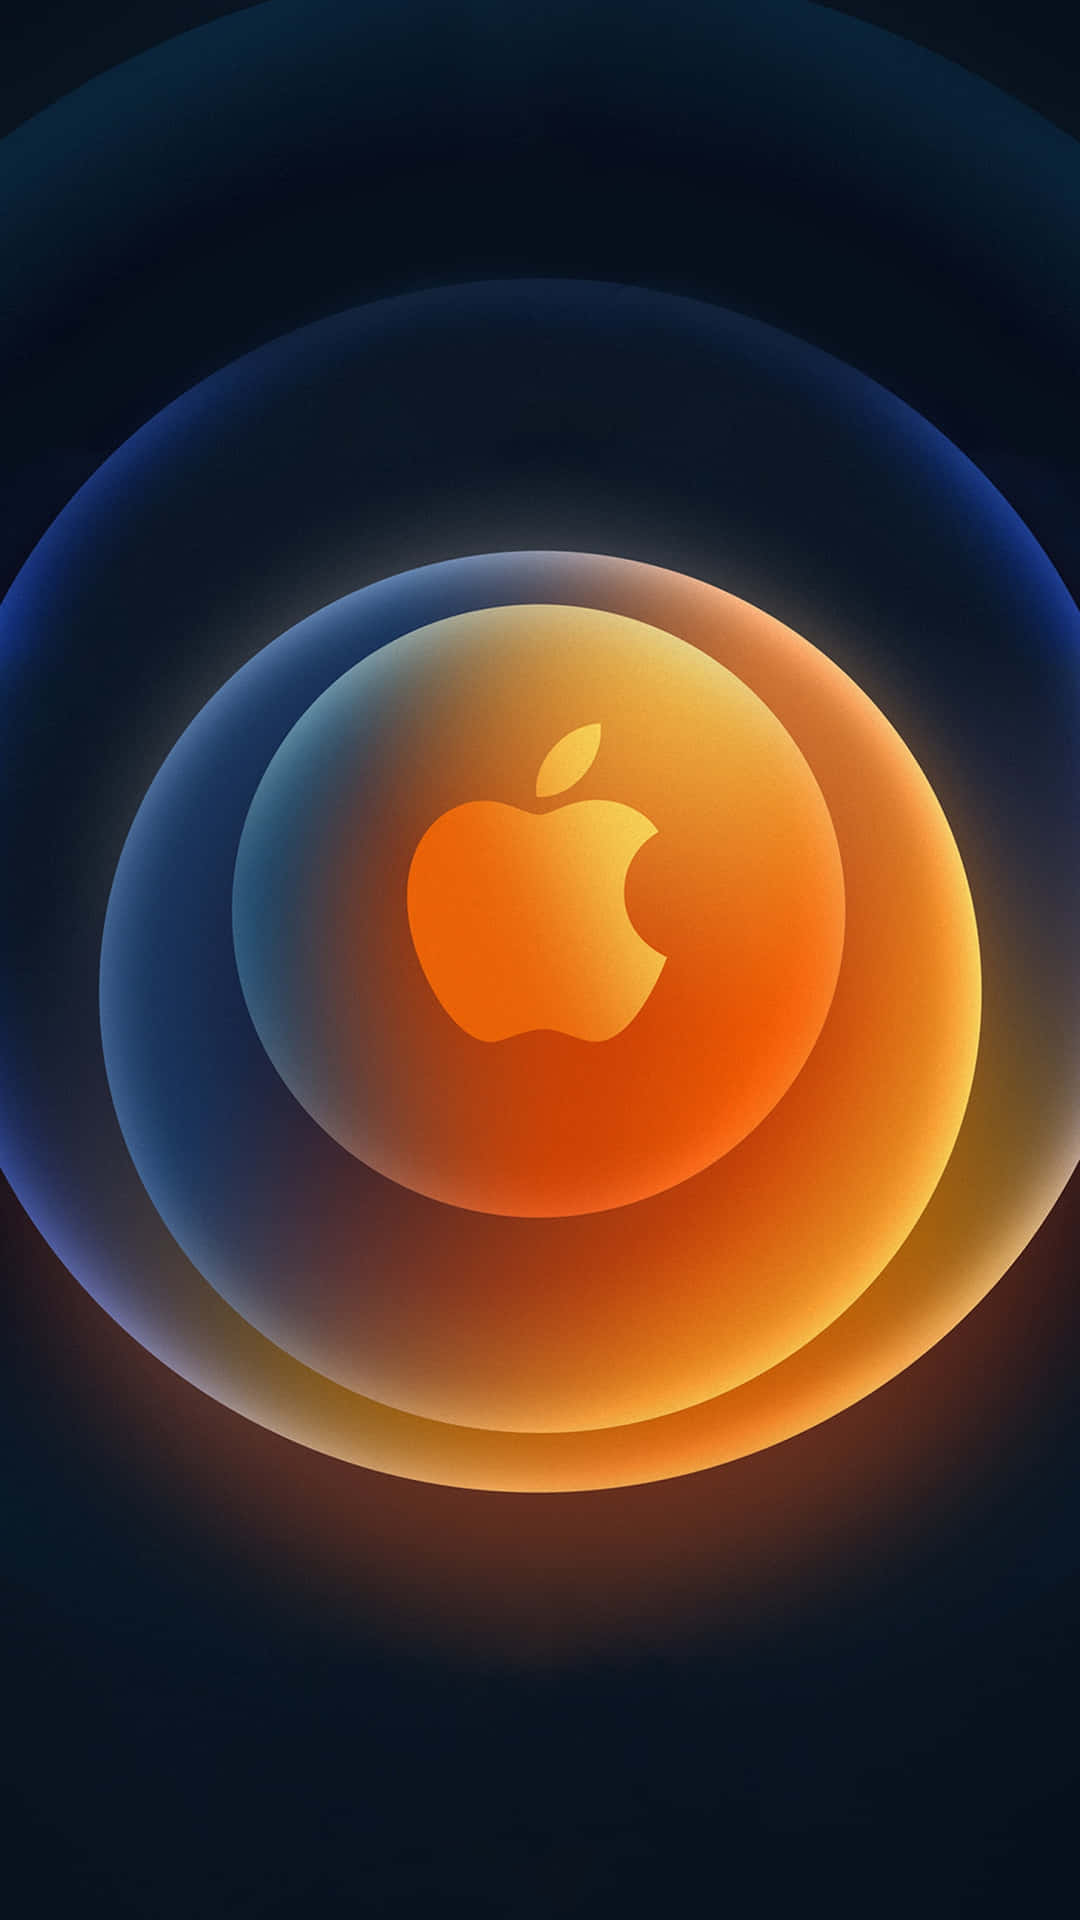 Iphone X Apple-logoet 1242 X 2208 Wallpaper